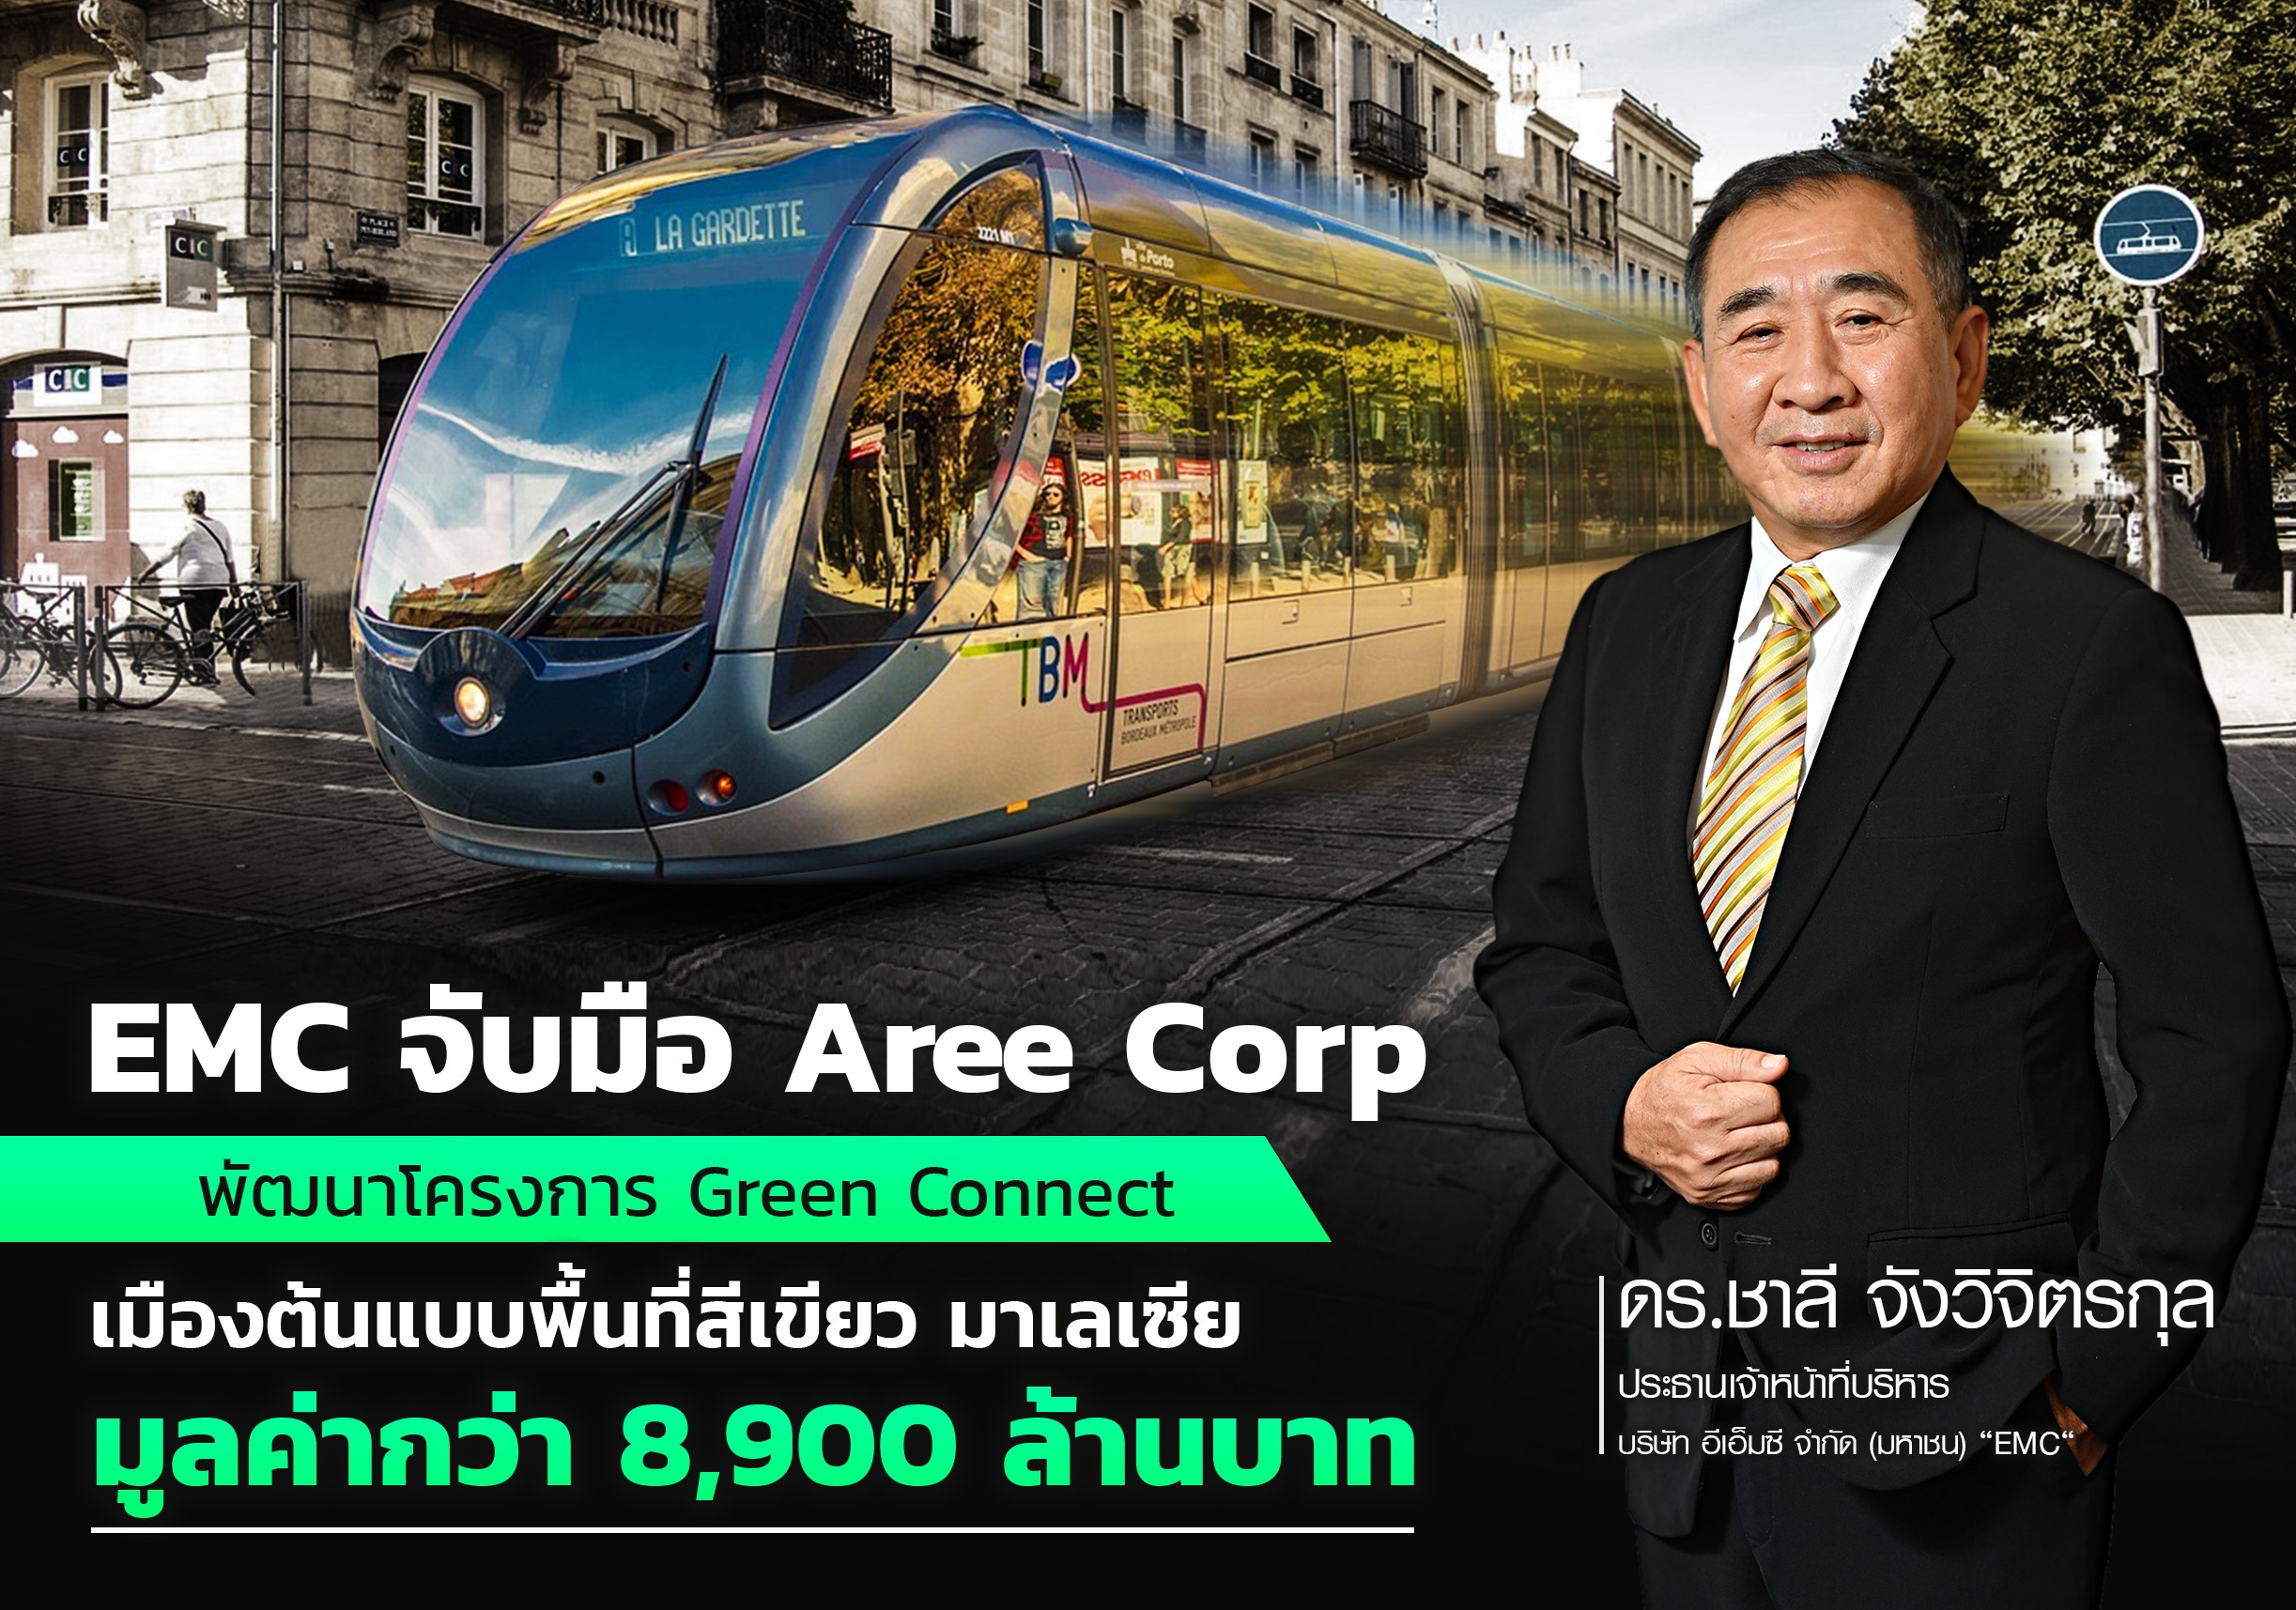 EMC จับมือ Aree Corp พัฒนาโครงการ Green Connect เมืองต้นแบบพื้นที่สีเขียว มาเลเซีย มูลค่ากว่า 8,900 ล้านบาท  